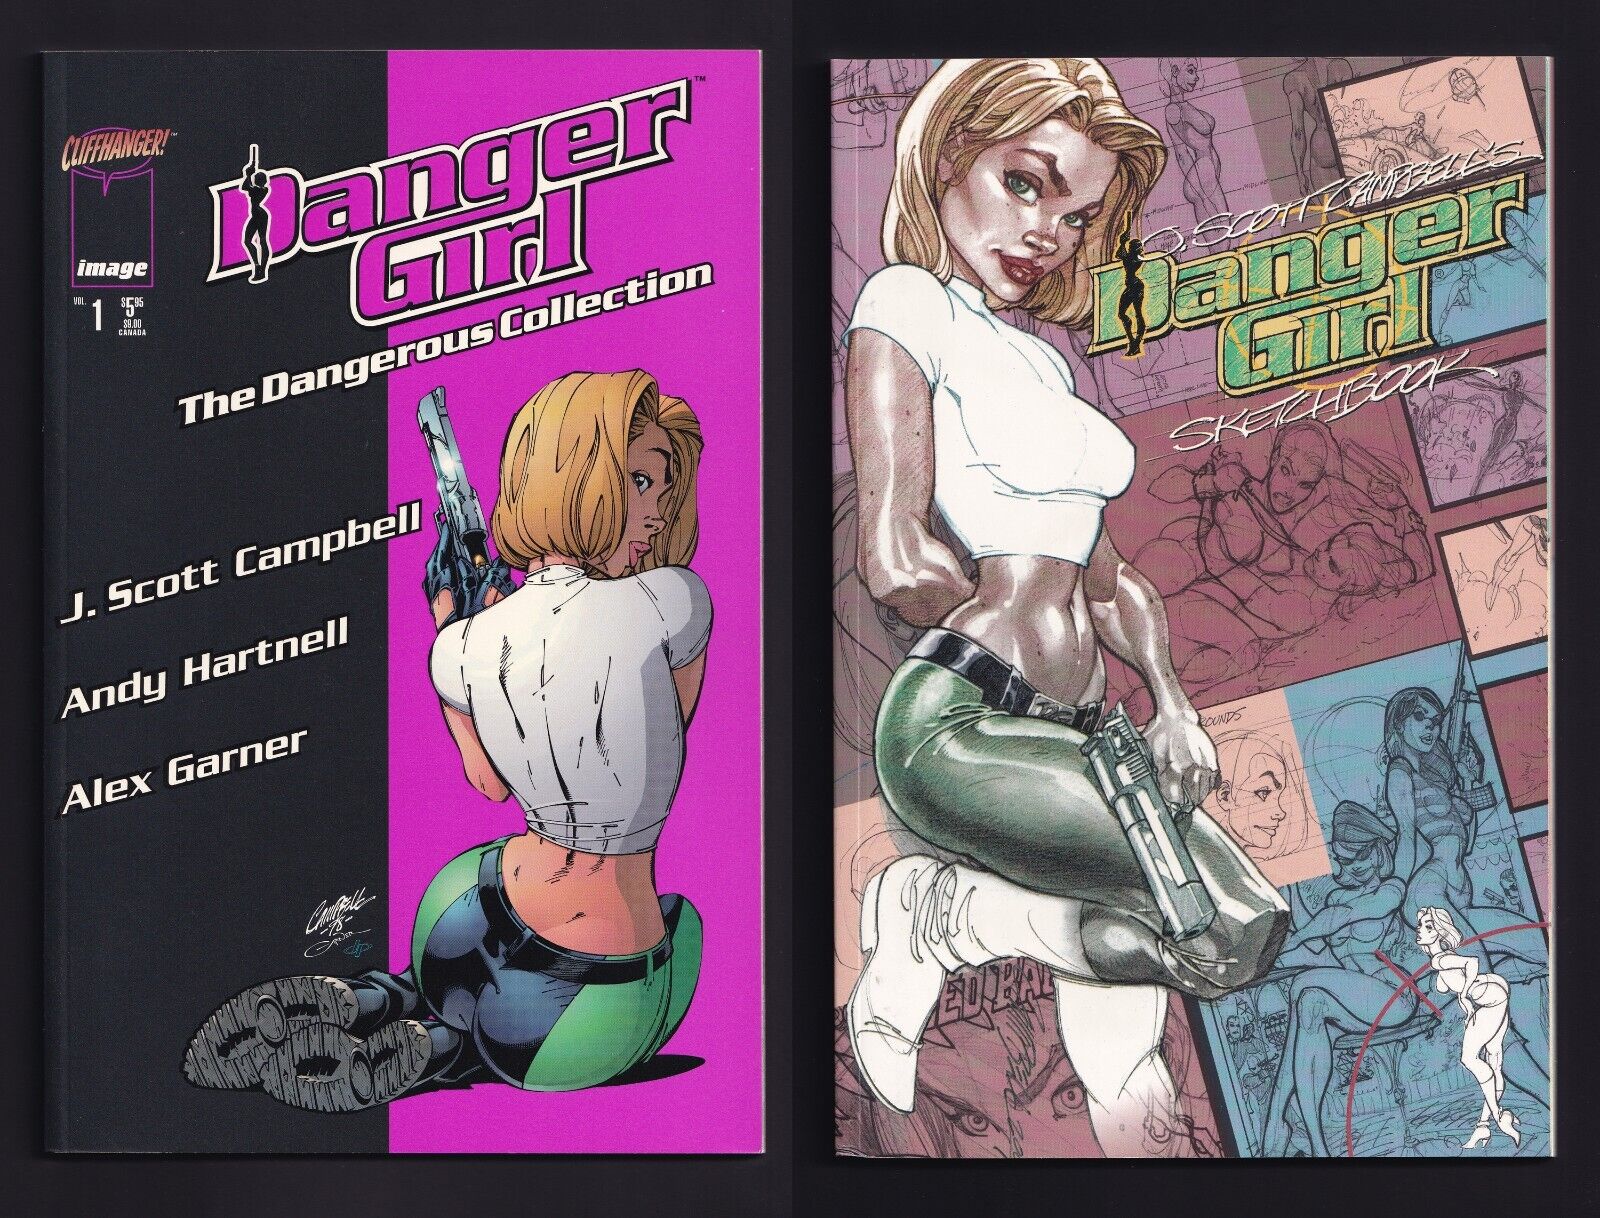 J. Scott Campbell's Danger Girl Sketchbook & The Dangerous Collection #1 Image